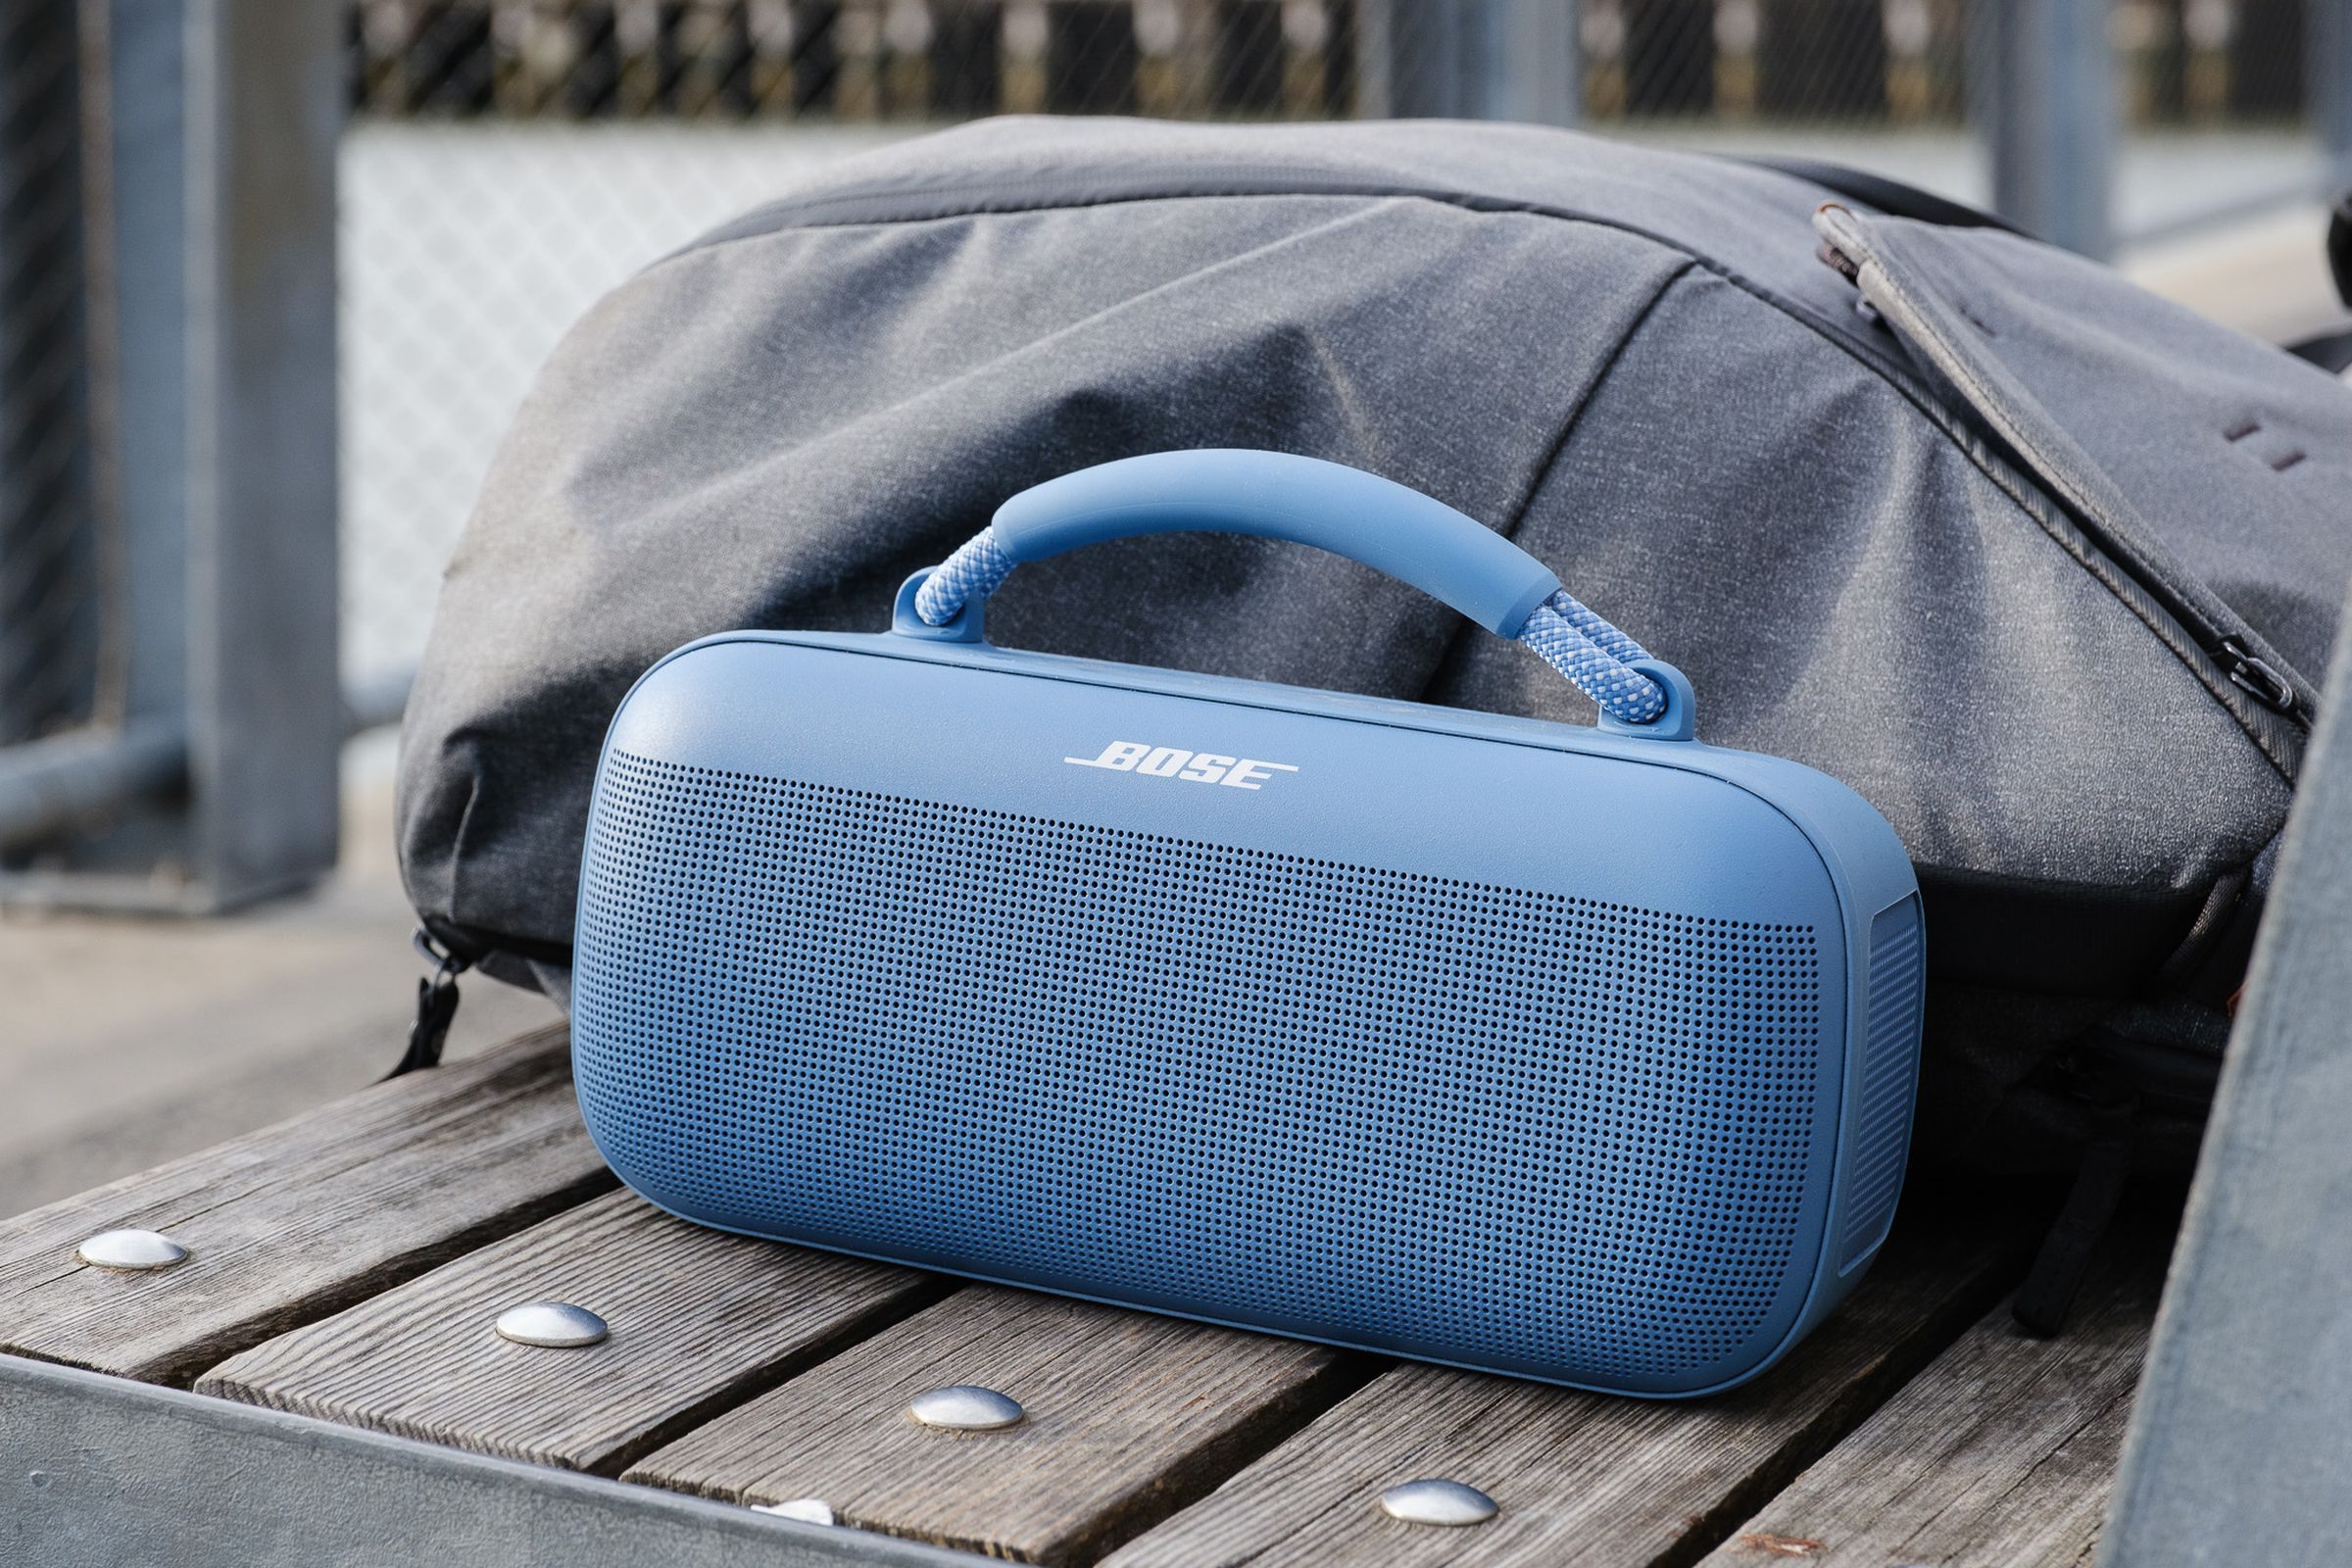 A photo of Bose’s light blue SoundLink Max portable speaker.